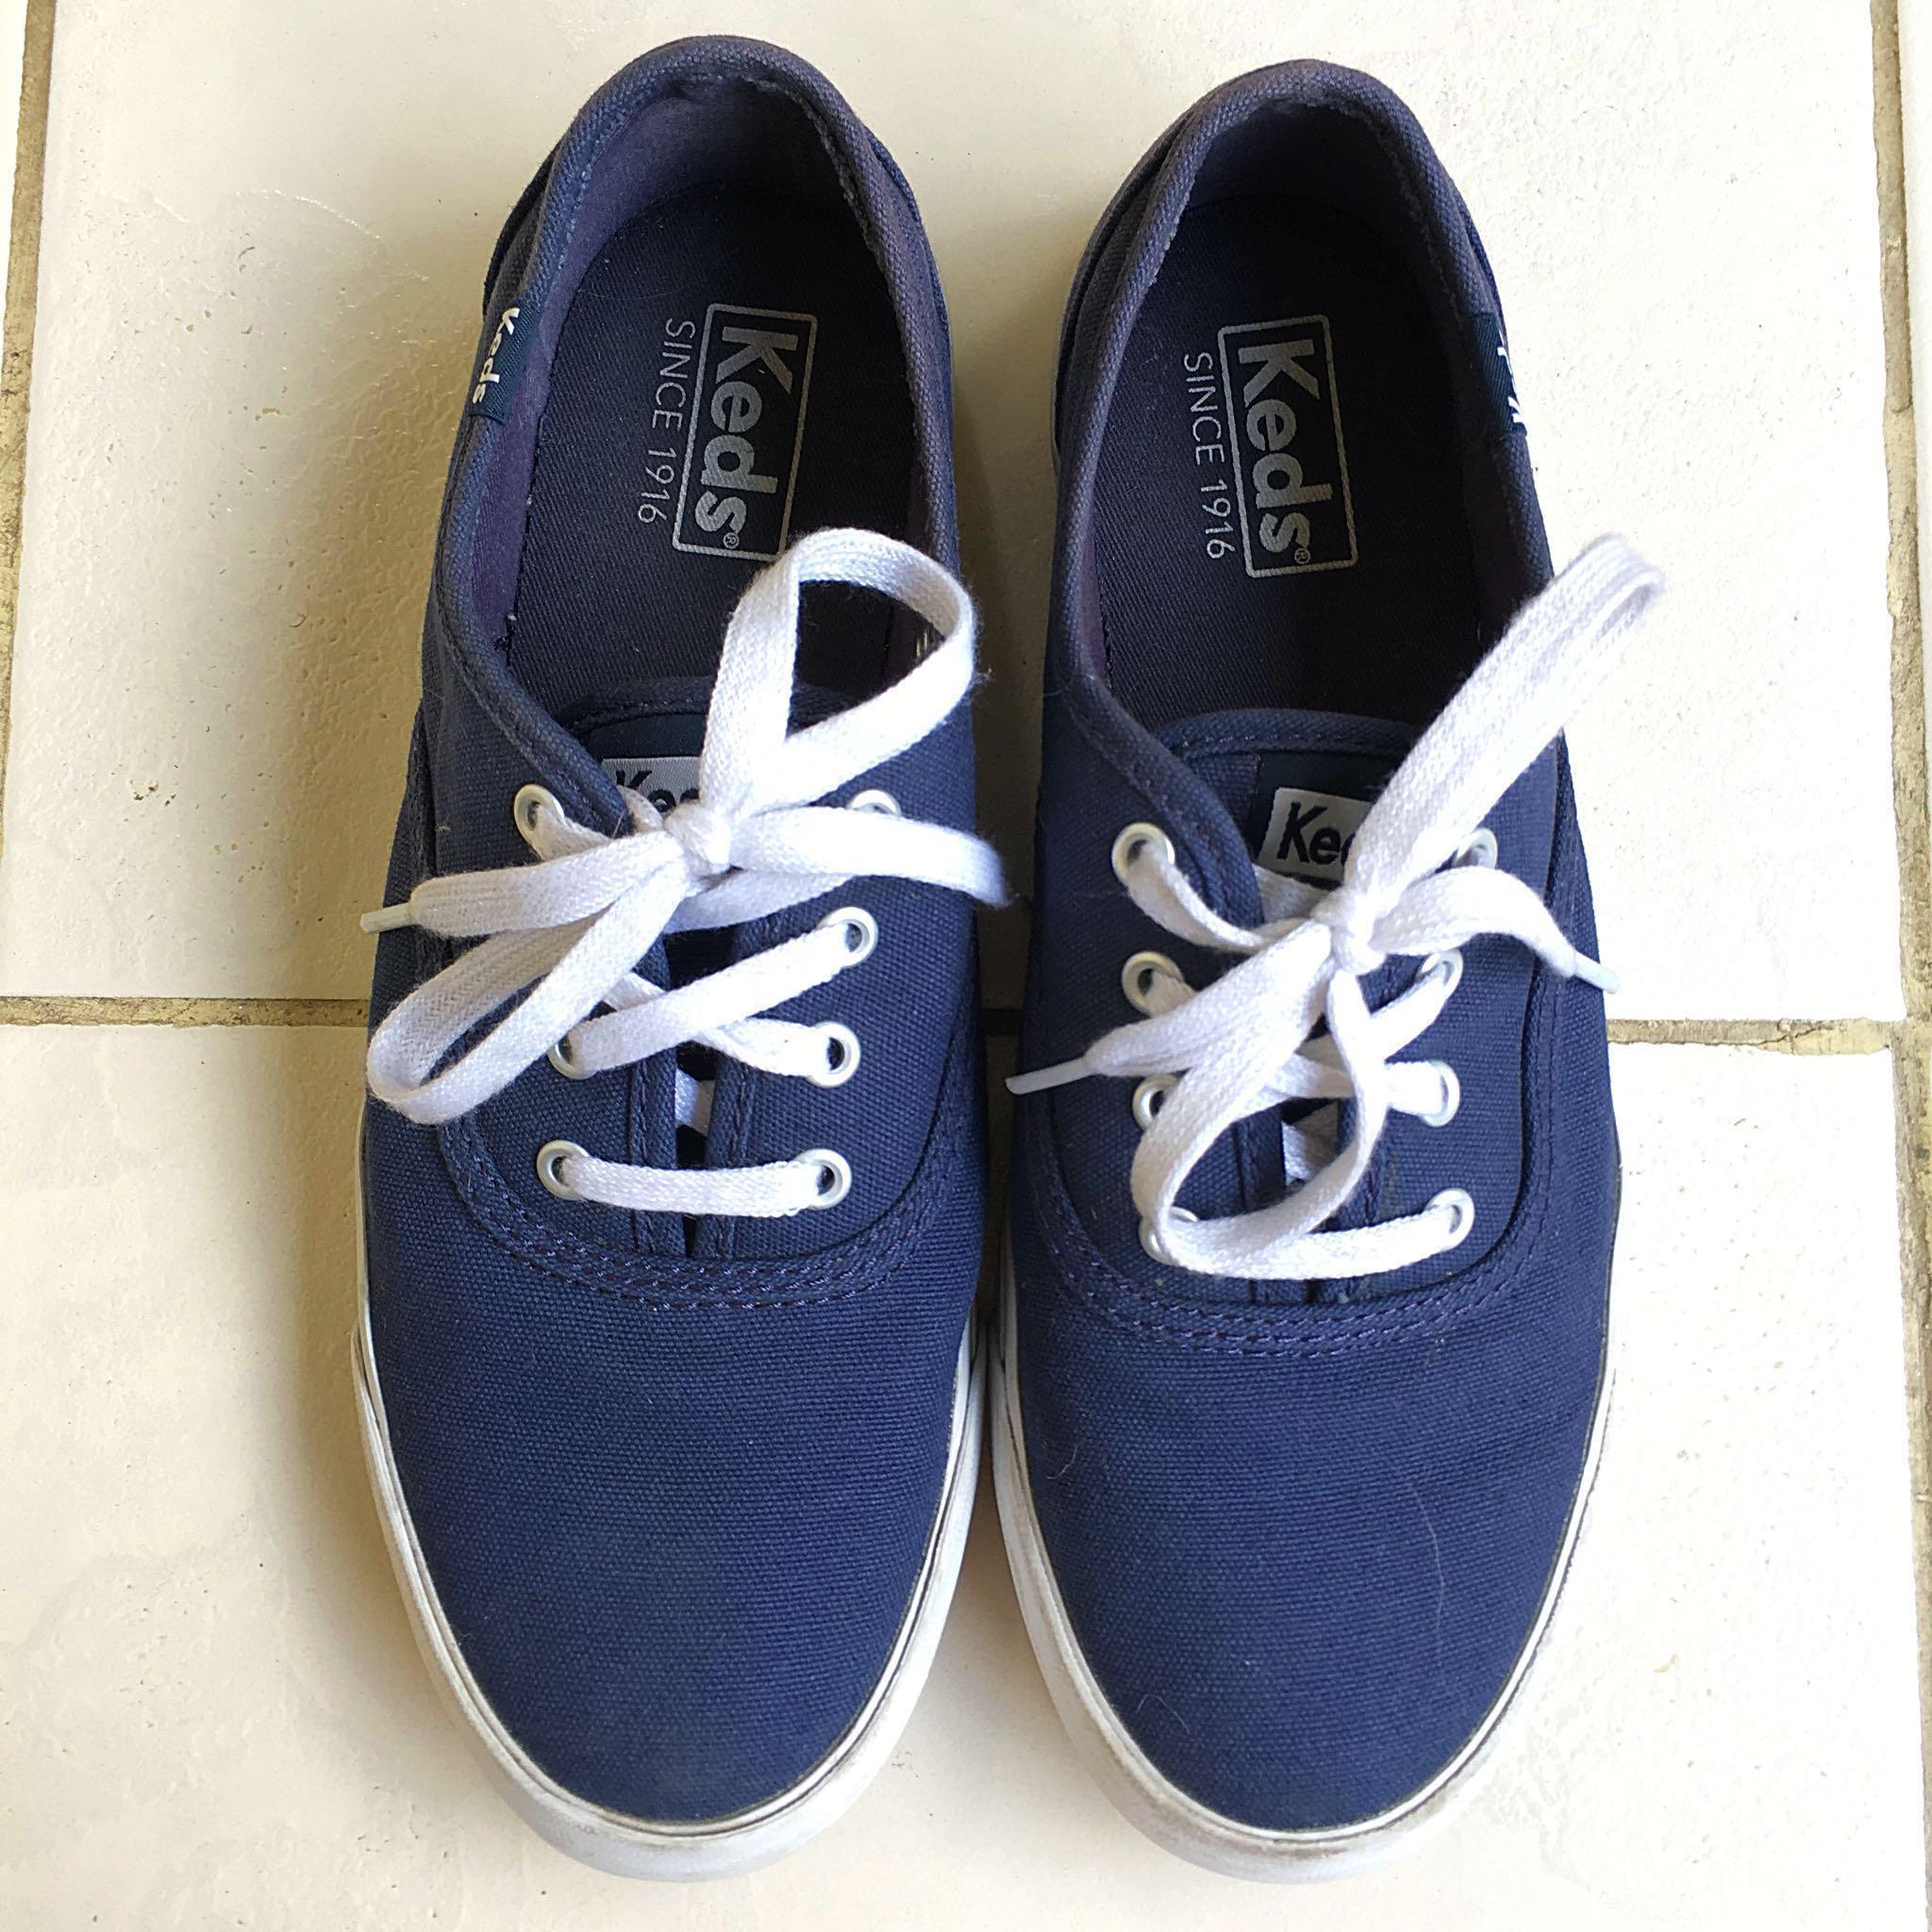 keds blue shoes